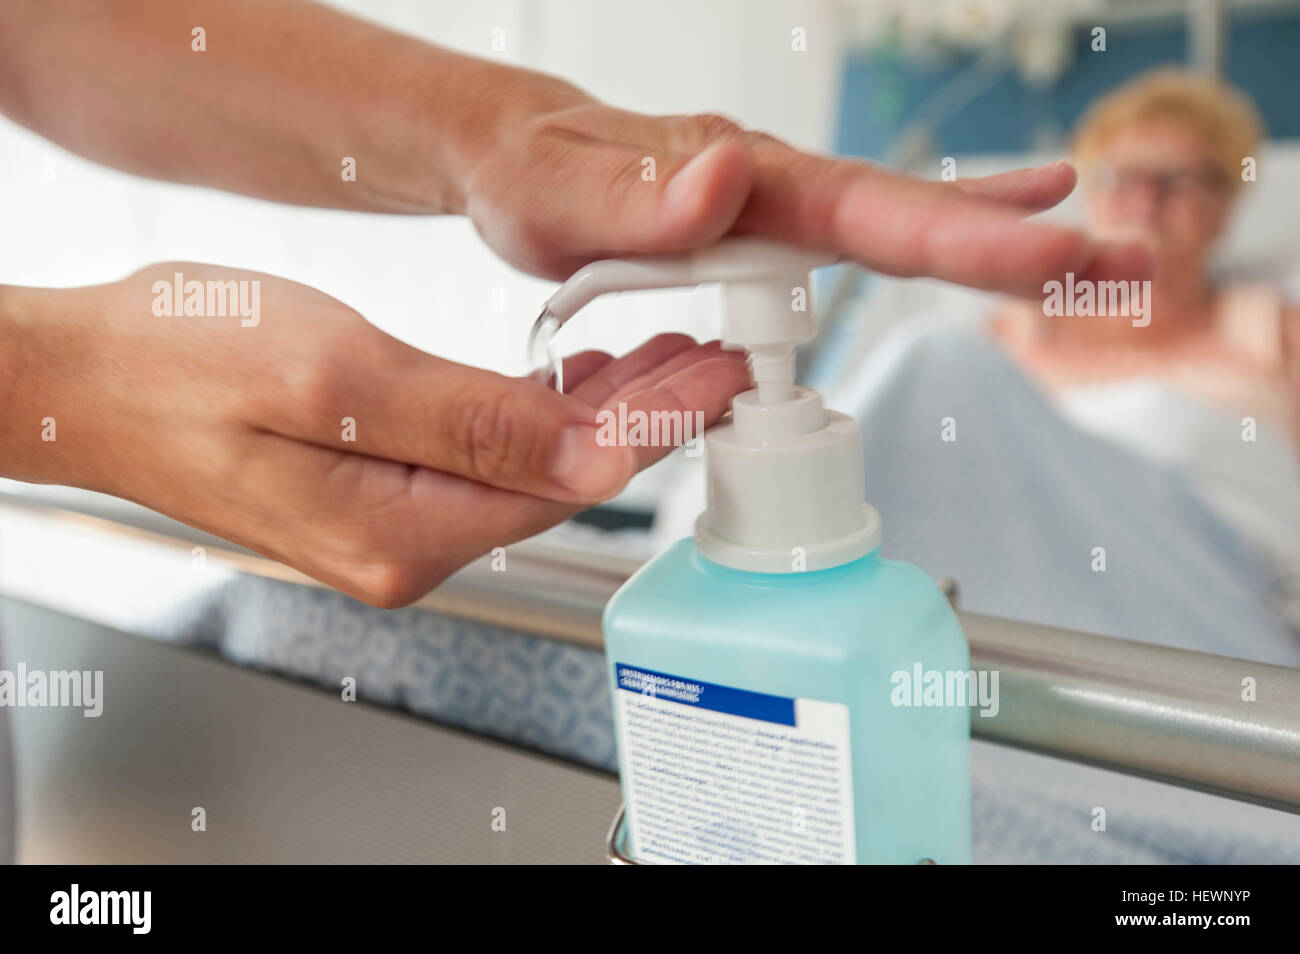 Nurse using hand sanitiser on hospital bed Stock Photo